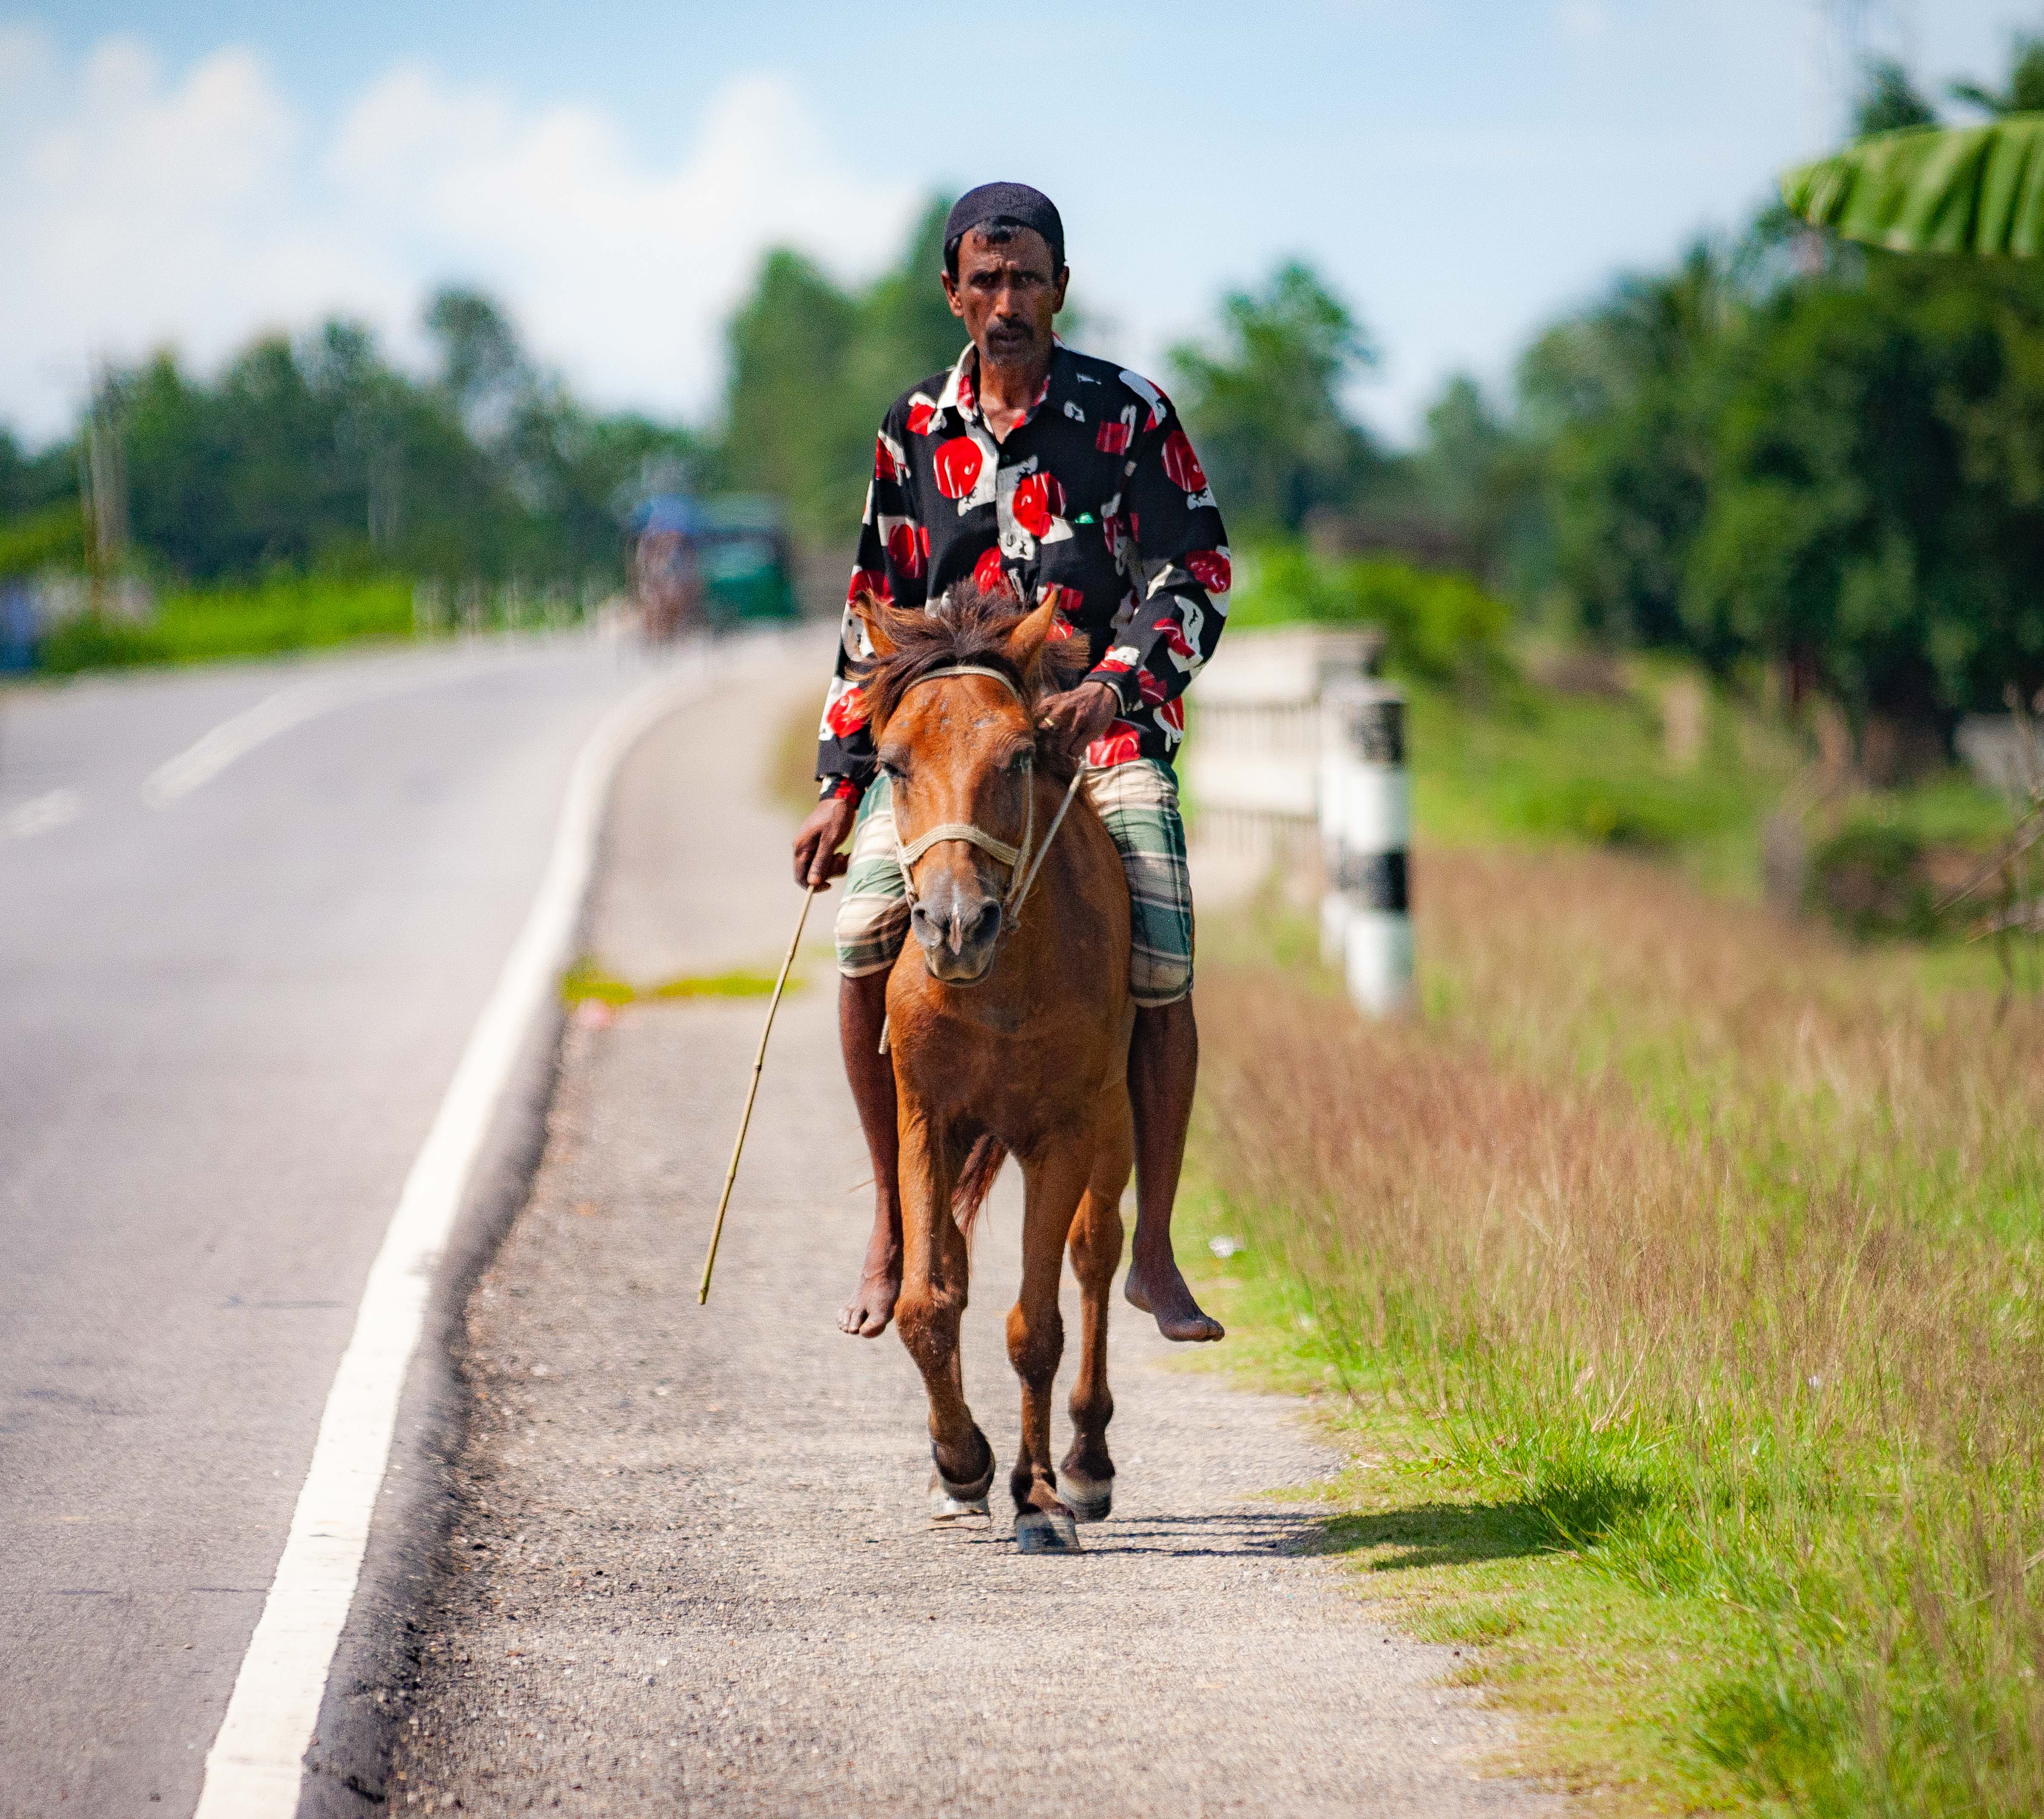 Bangladesh, Moulvibazar Prov, Man HorseBack, 2009, IMG 8392